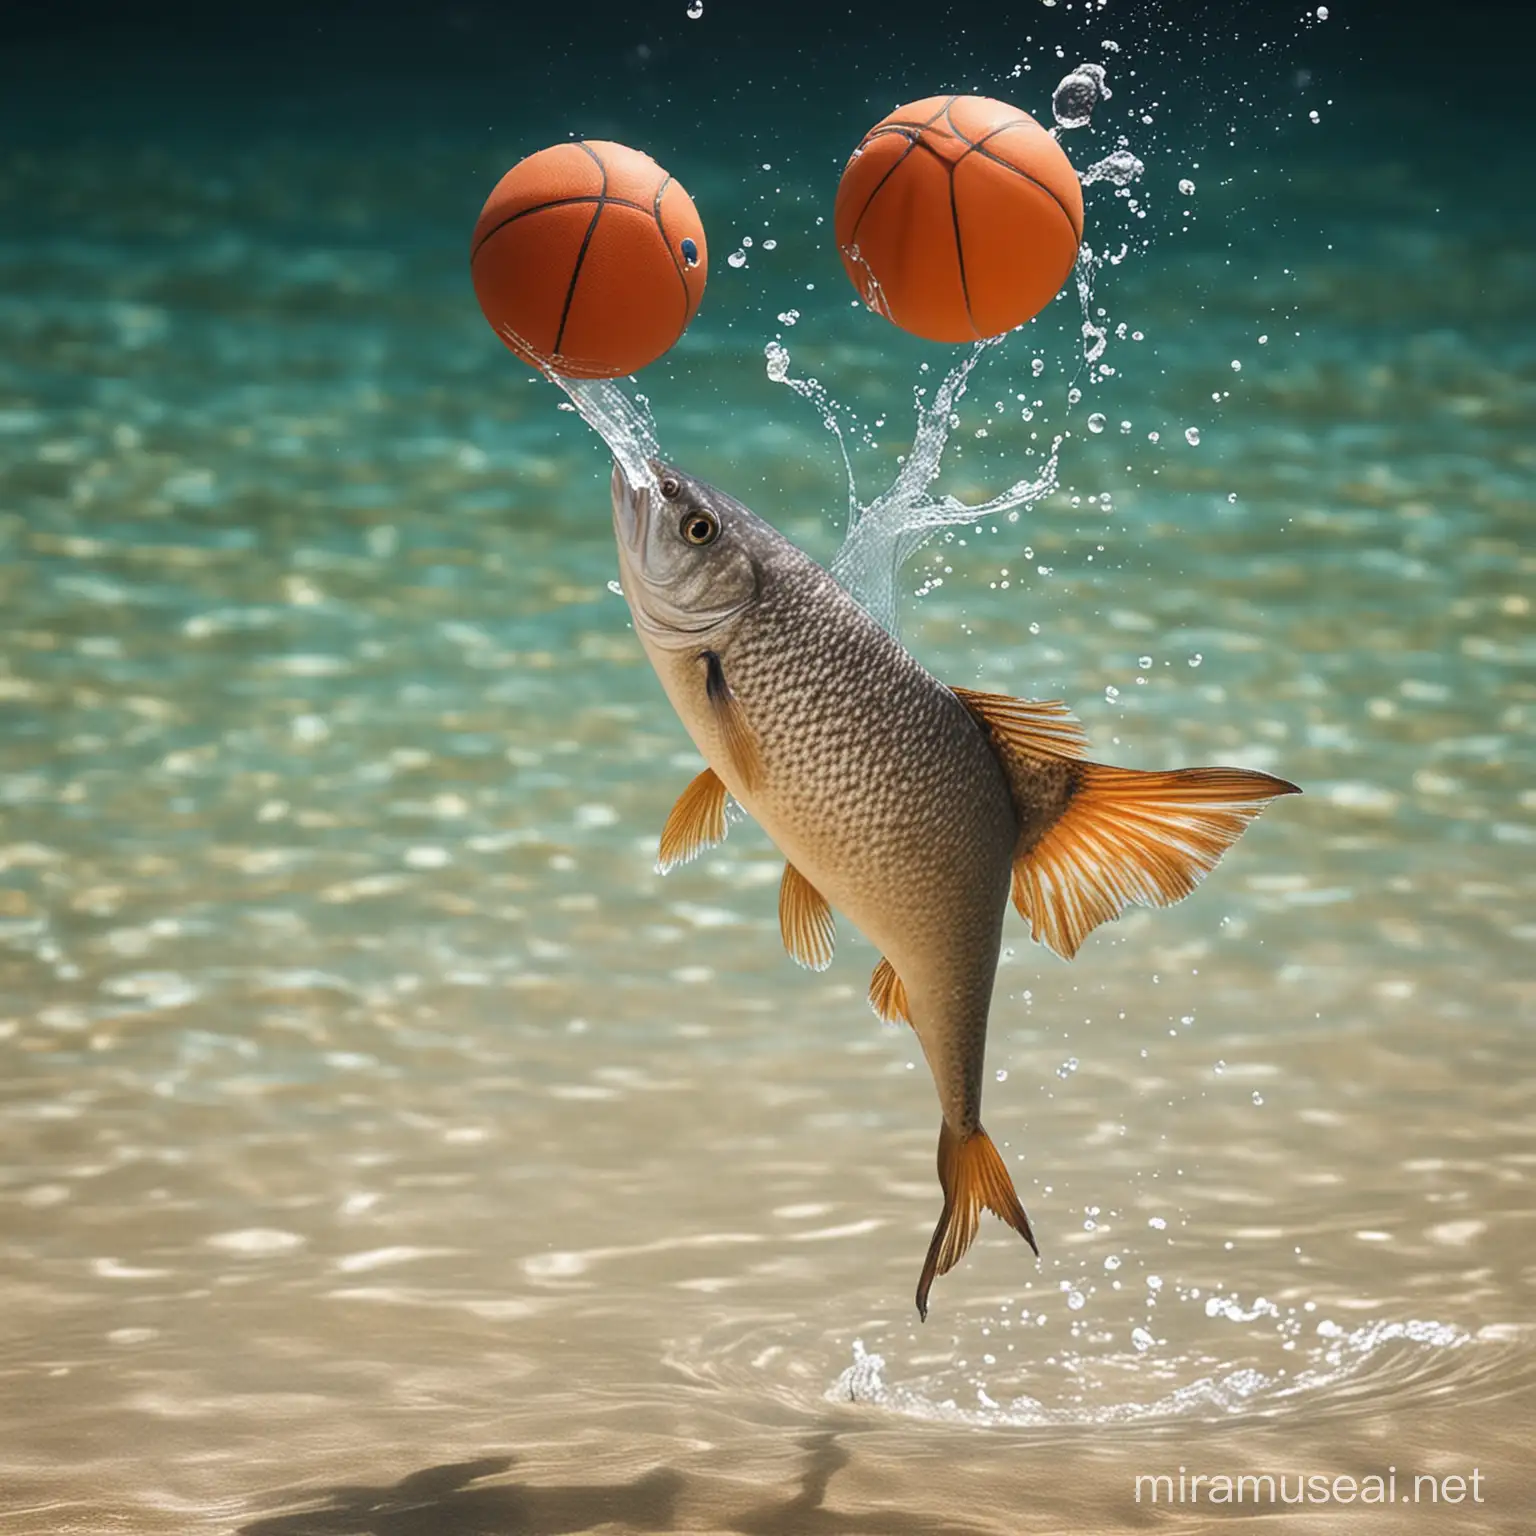 A fish plaing basketball